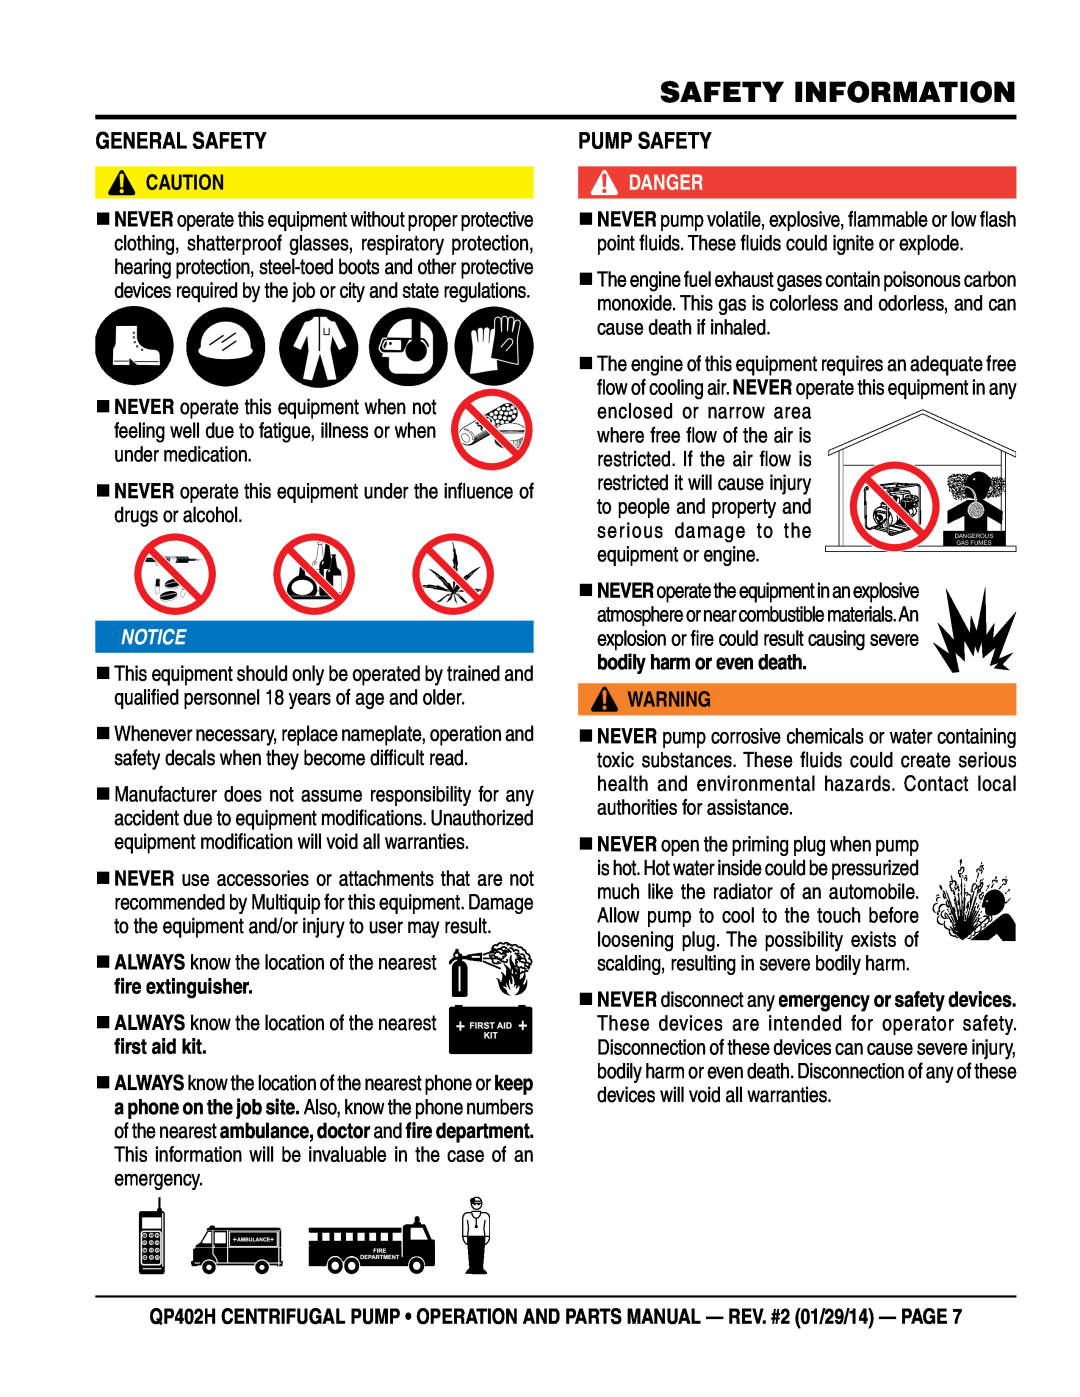 Multiquip qp402h manual General Safety, Pump Safety, Safety Information, Danger 